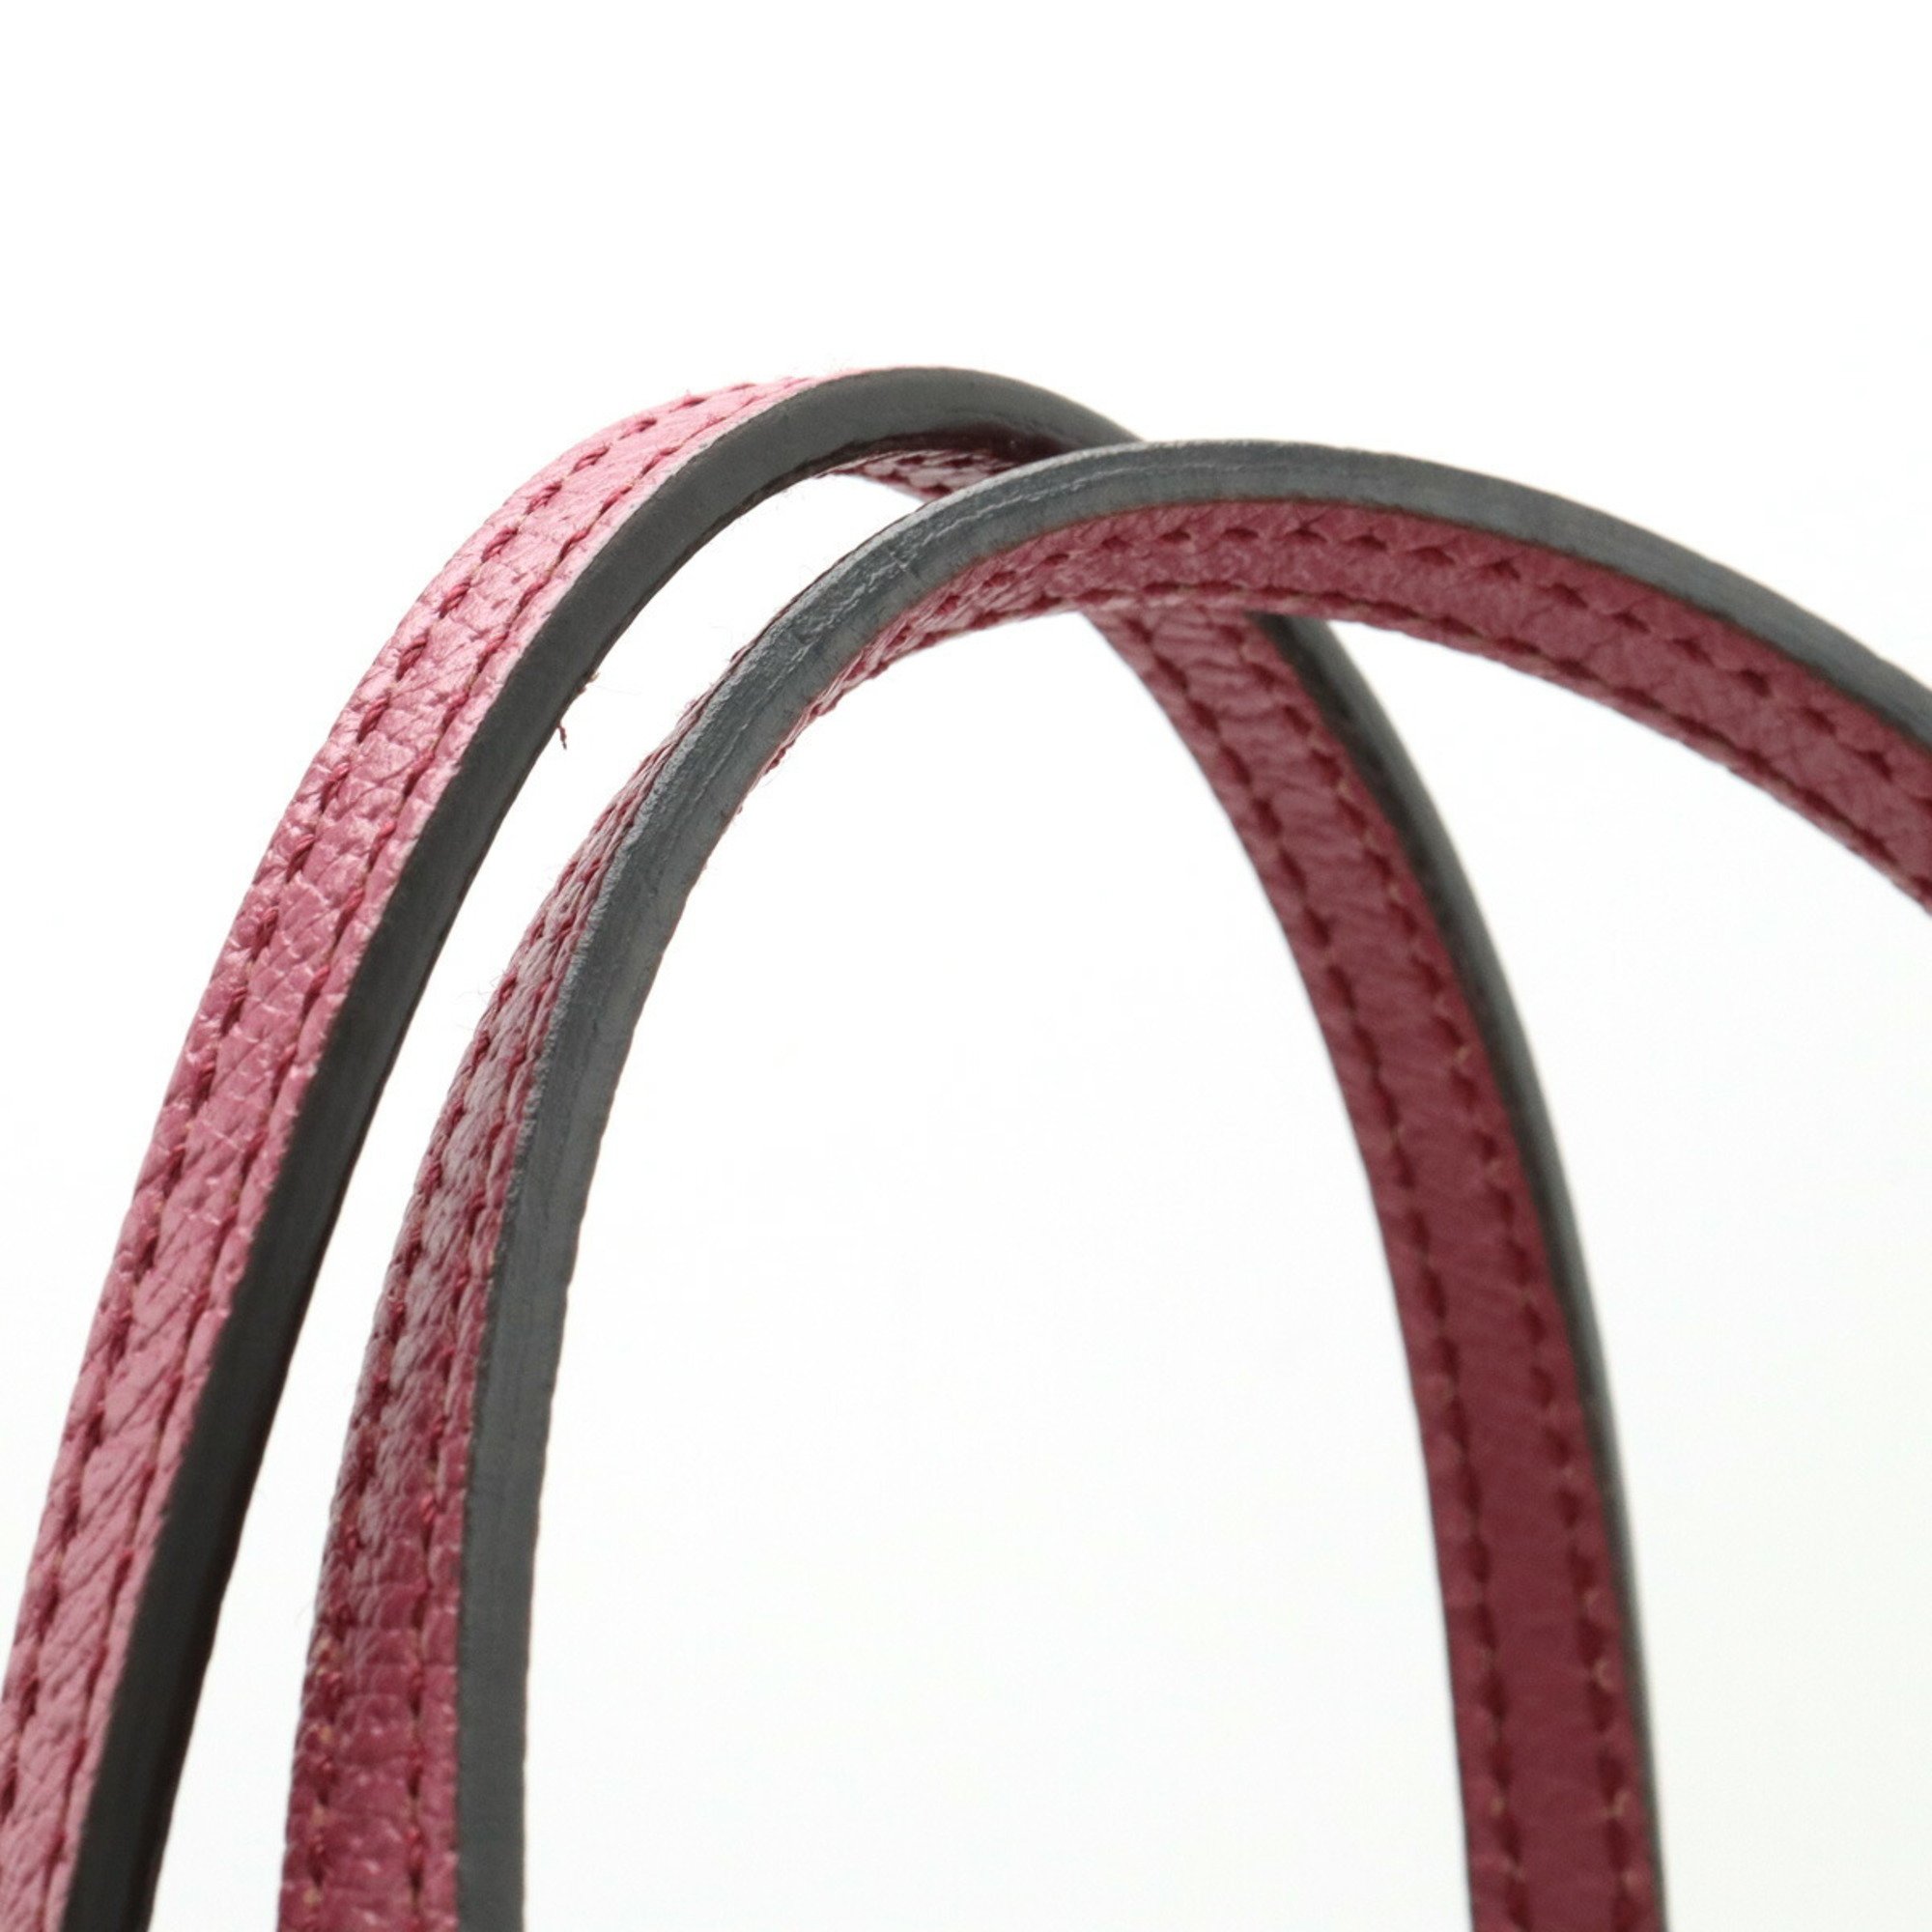 GUCCI GG Canvas Tote Bag Handbag Leather Beige Purple Pink 353119